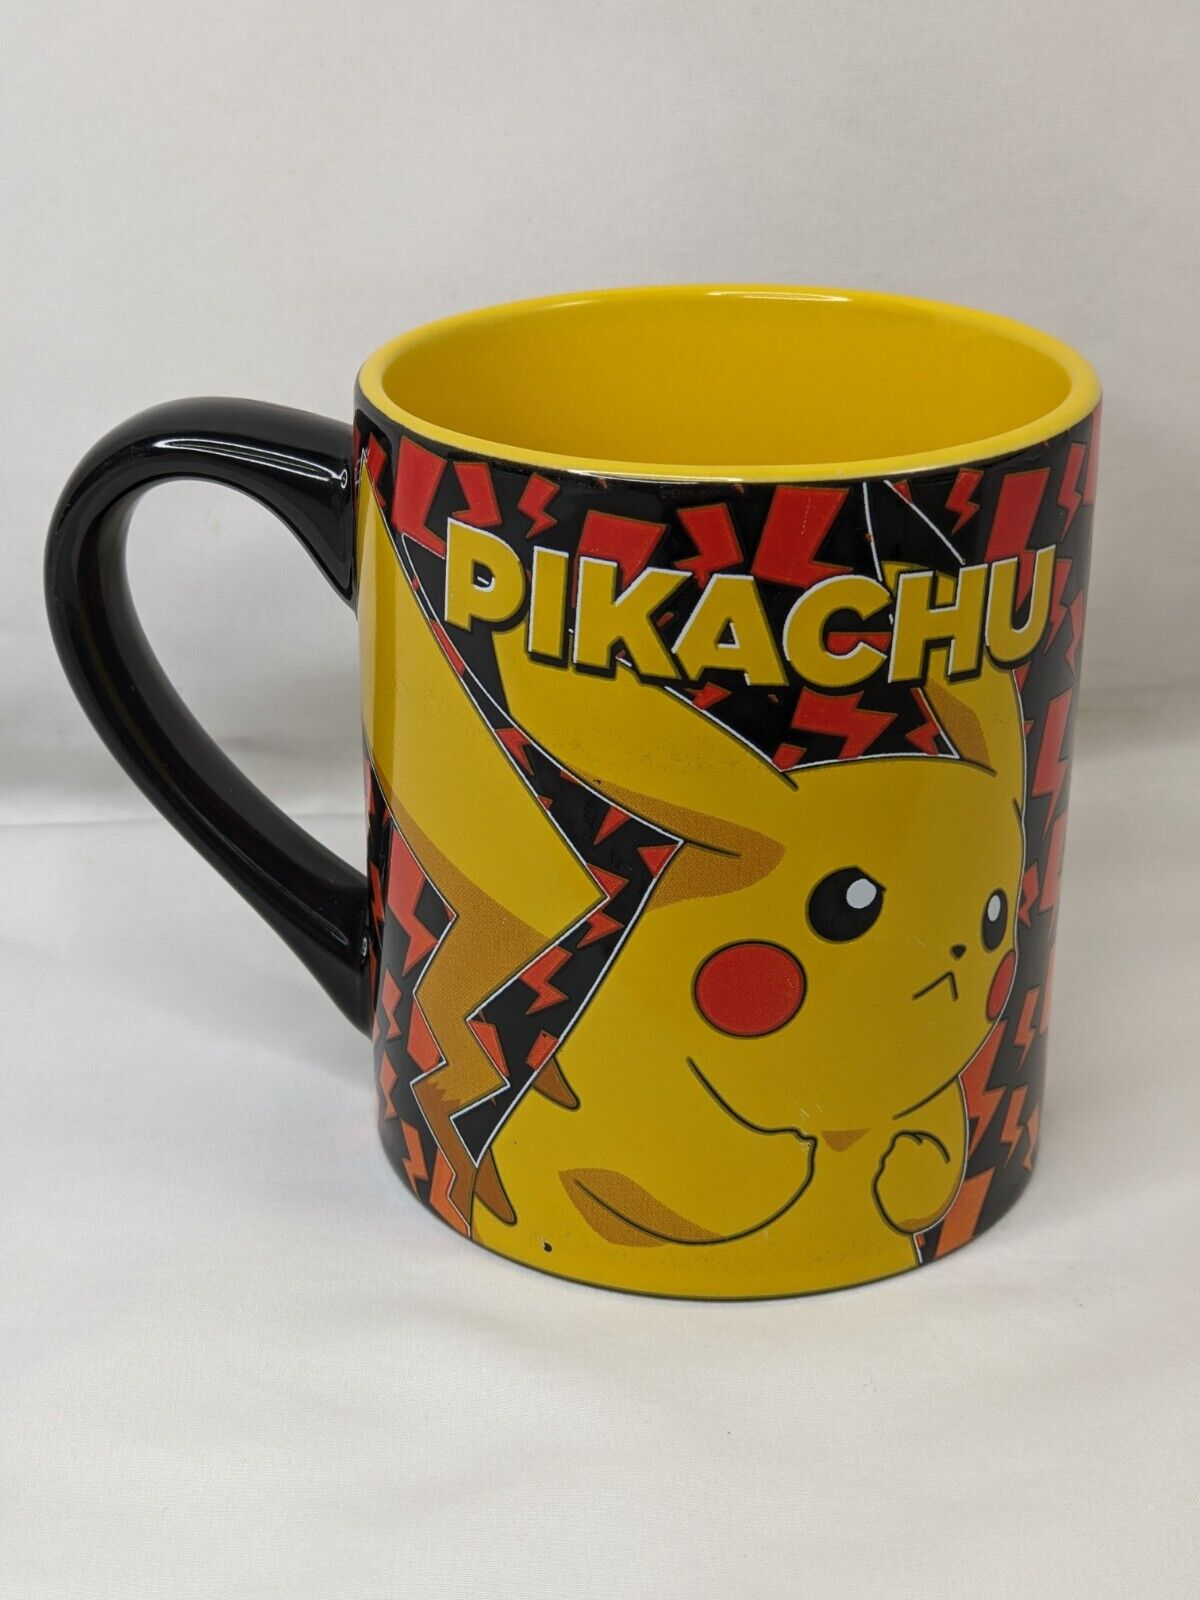 Pikachu Pokemon Coffee Cup Mug 2016 Nintendo